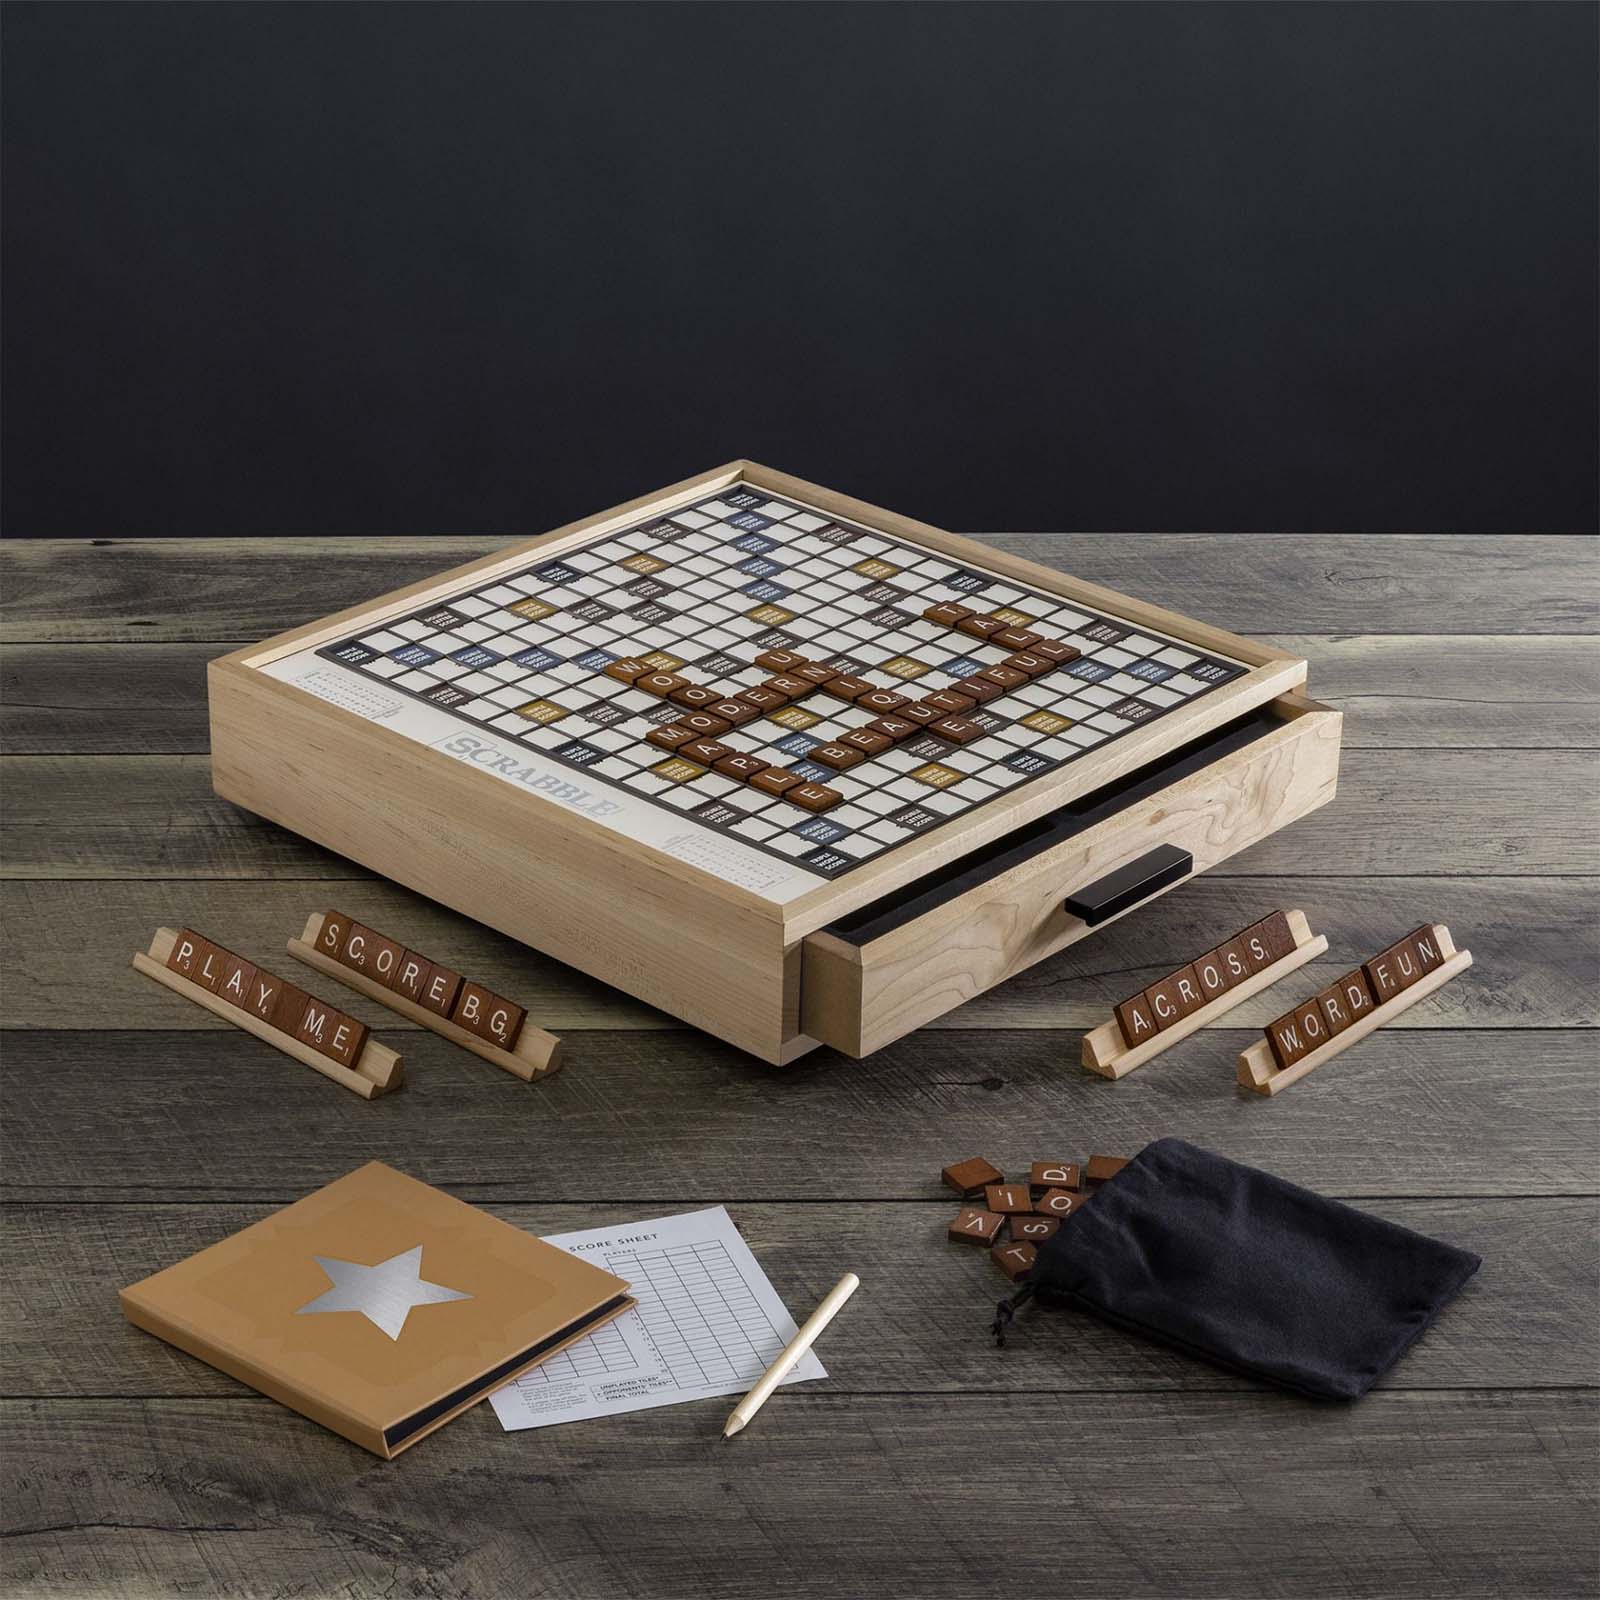 Scrabble Luxe - Maple